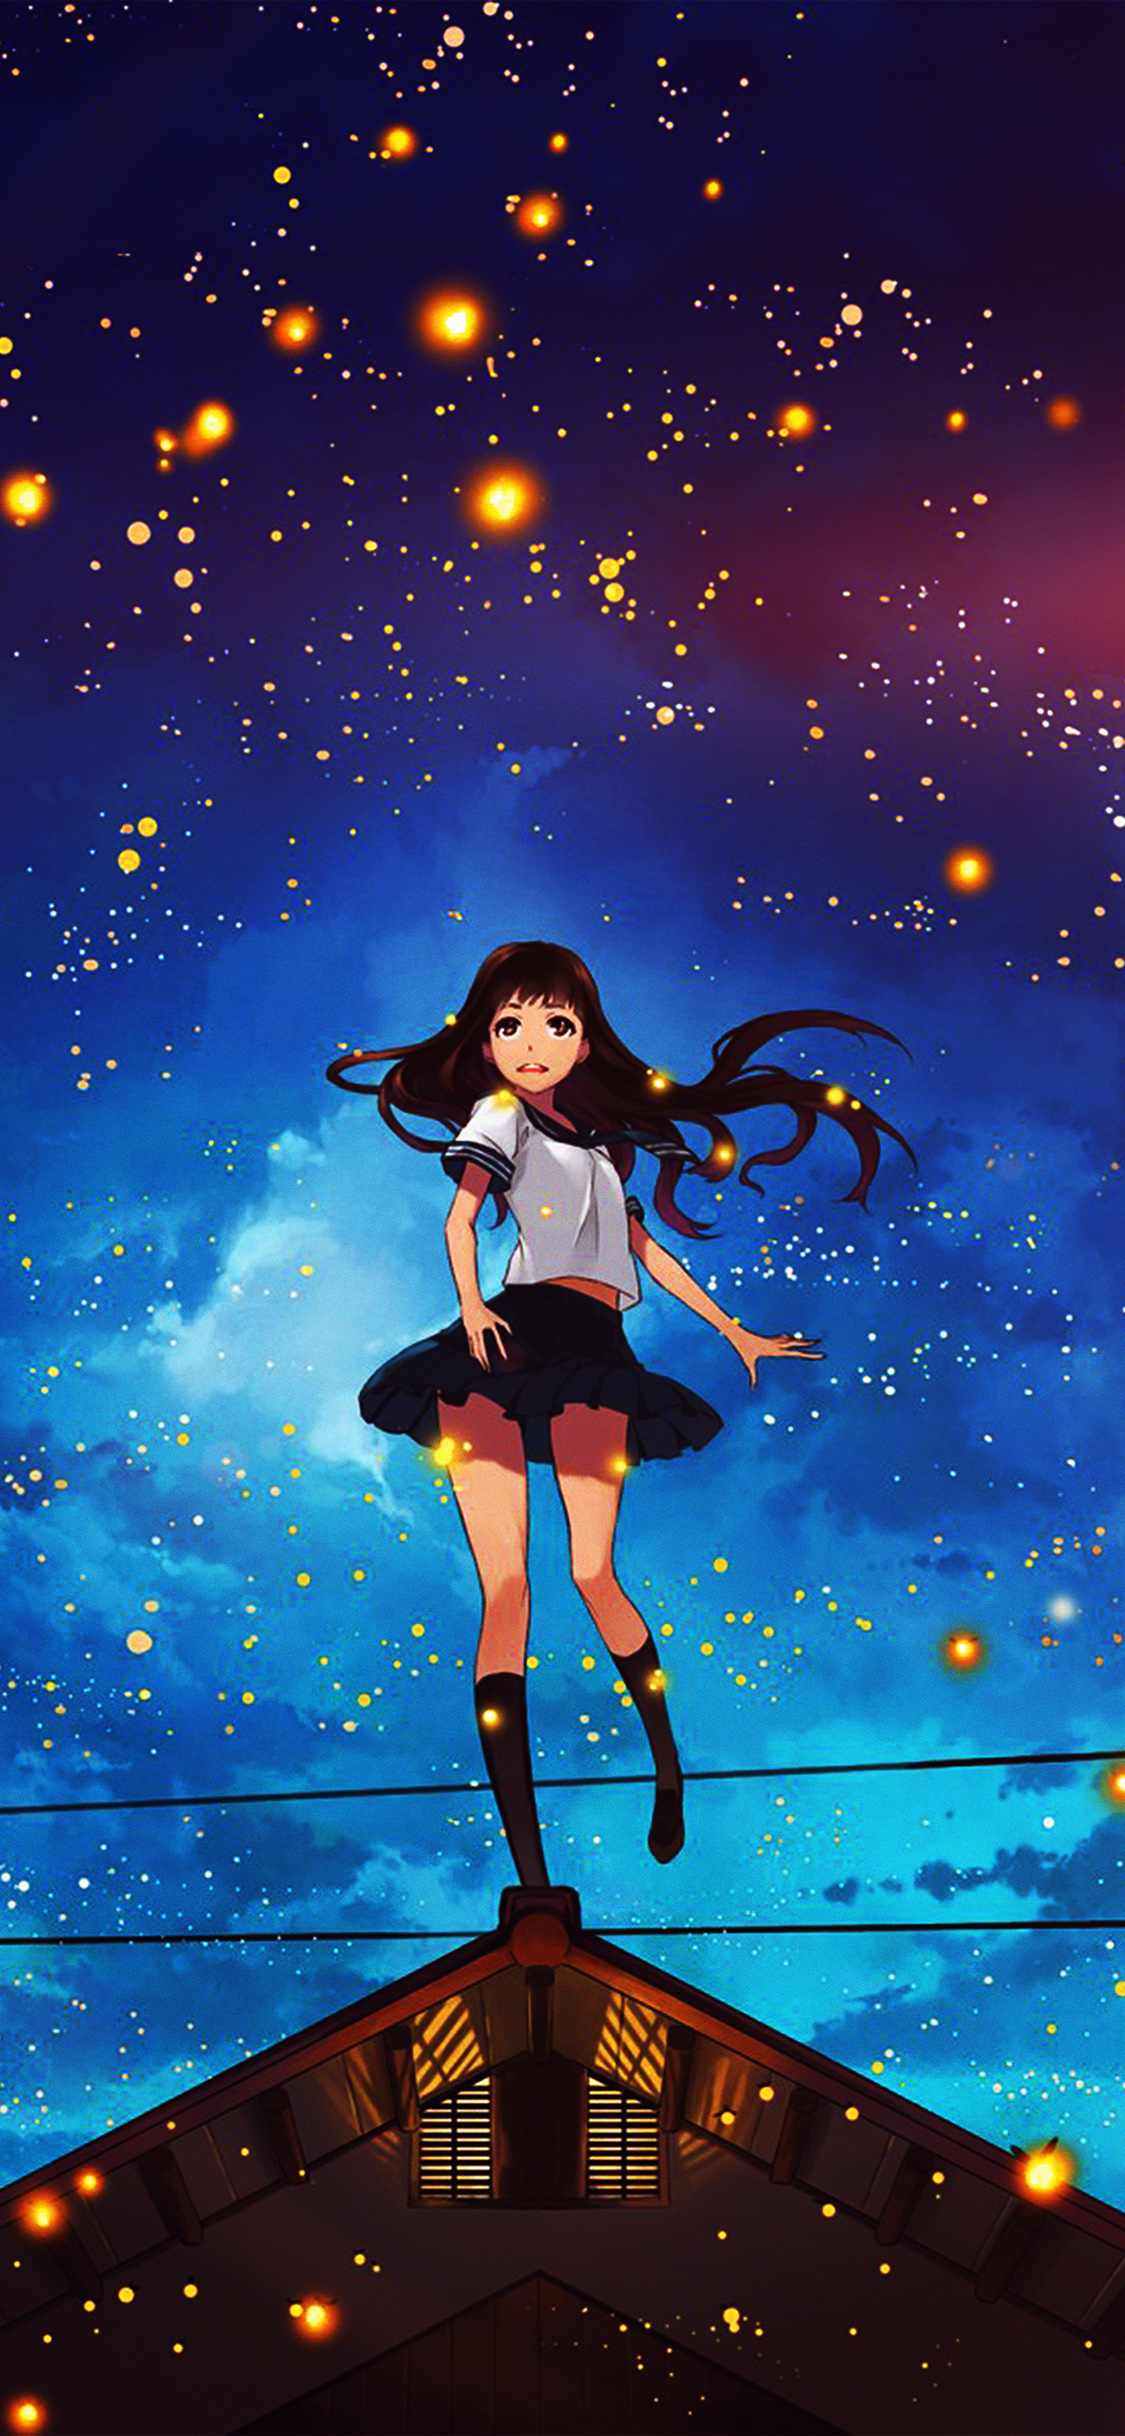 iPhone X wallpaper. girl anime star space night illustration art flare